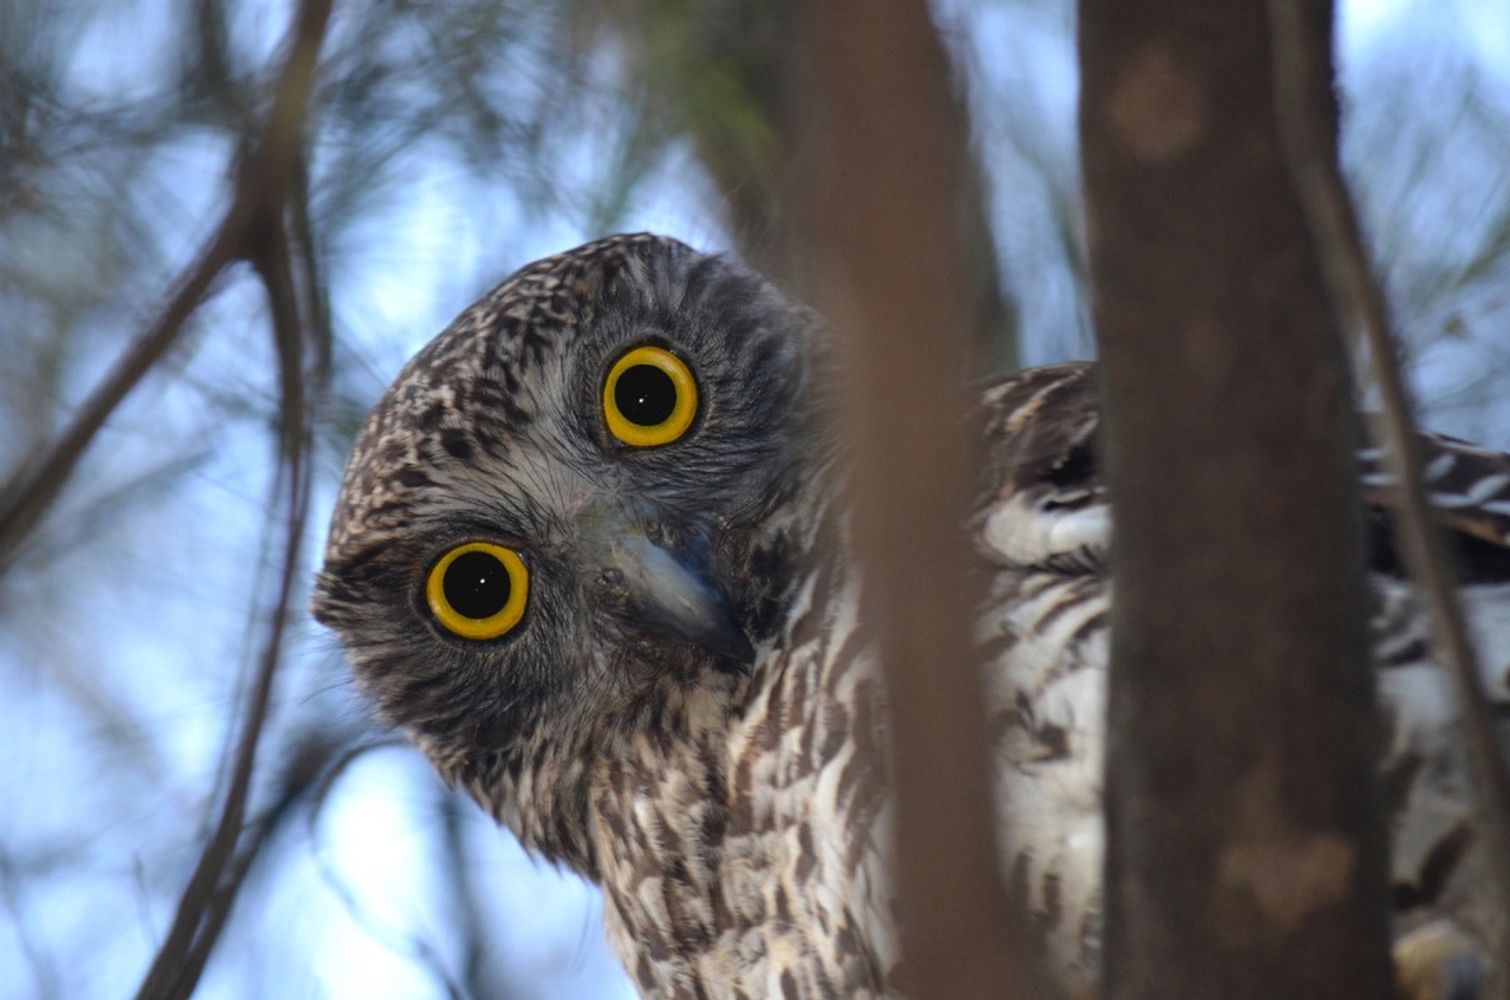 powerful owl
wildlife
habitat
bushfire recovery
wildbnb
owlbnb
bushfire recovery
biodiversity
